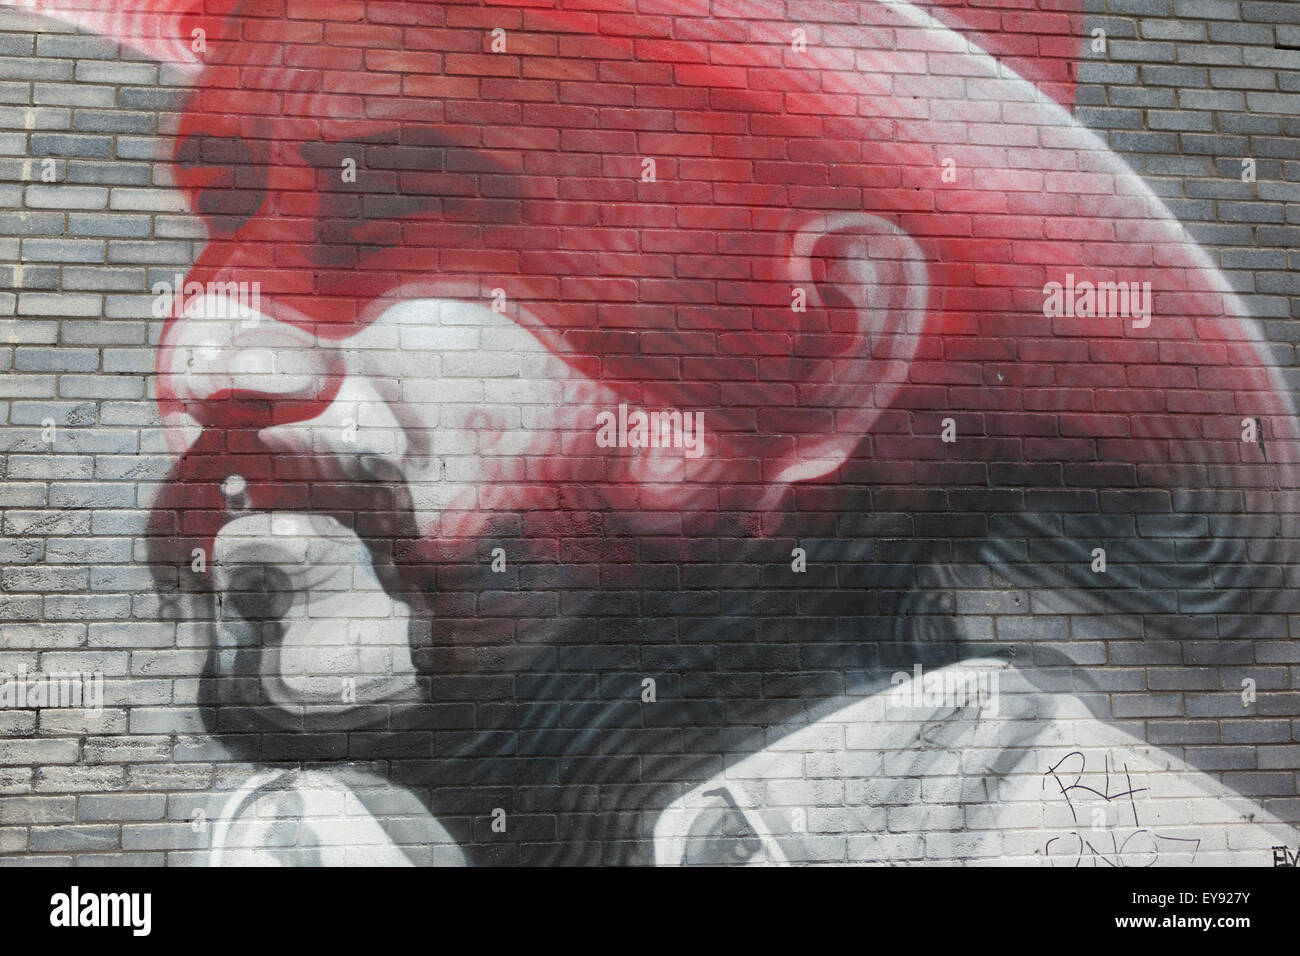 Hoxton, London: Street art, Man with stetson hat on brick wall Stock Photo